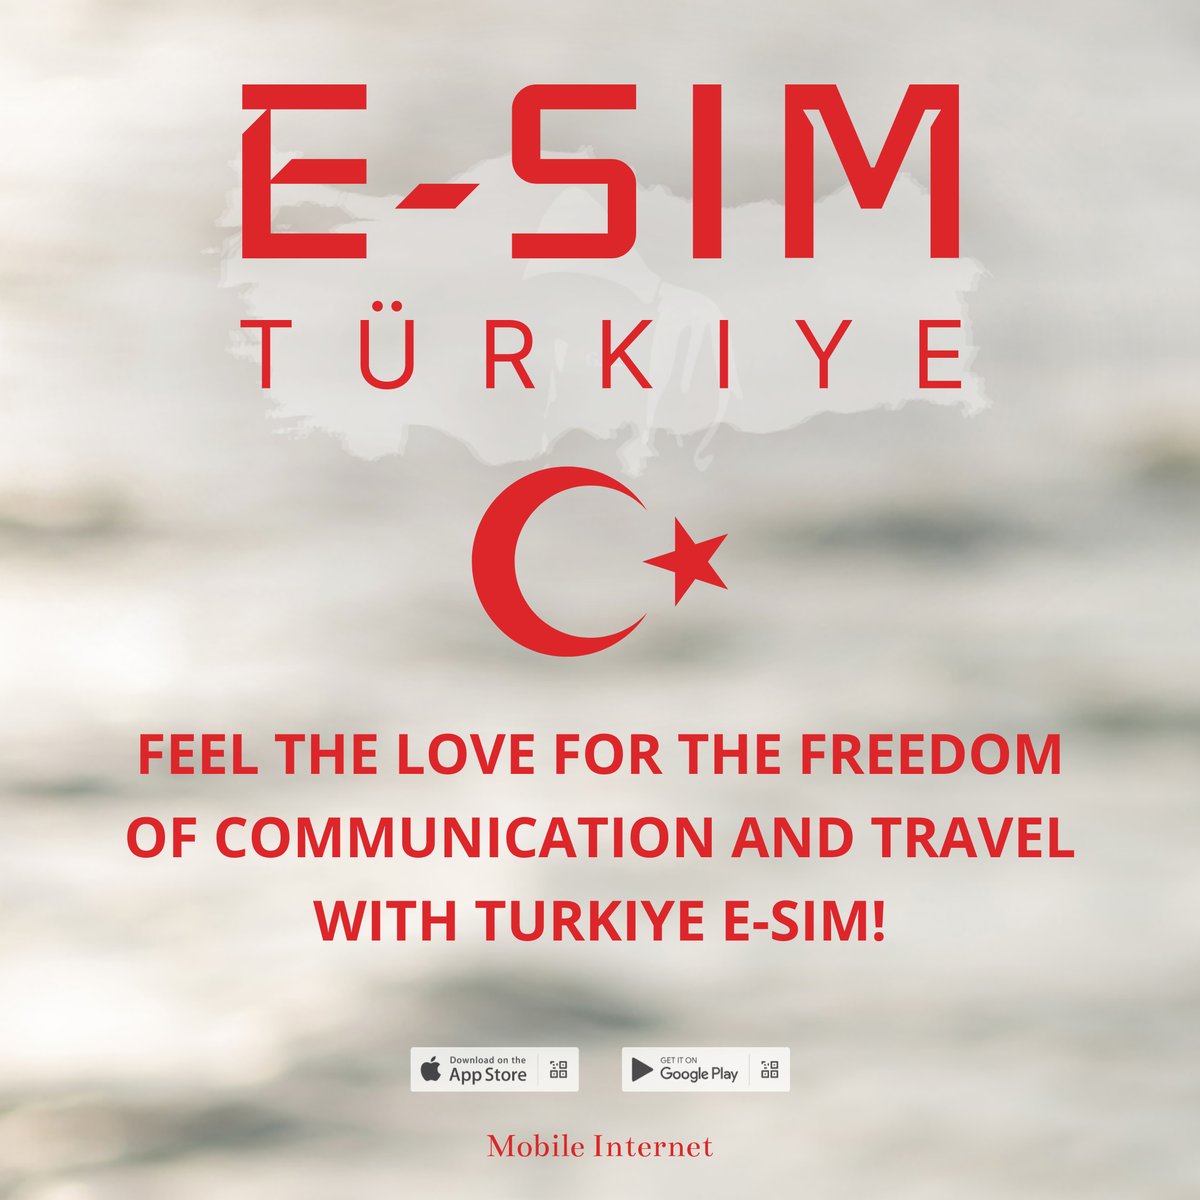 Feel the love for the freedom of communication and travel with Turkiye E-SIM!

turkiyesim.com

#TurkiyeEsim #esim #app #MobileInternet #travel #Turkiye